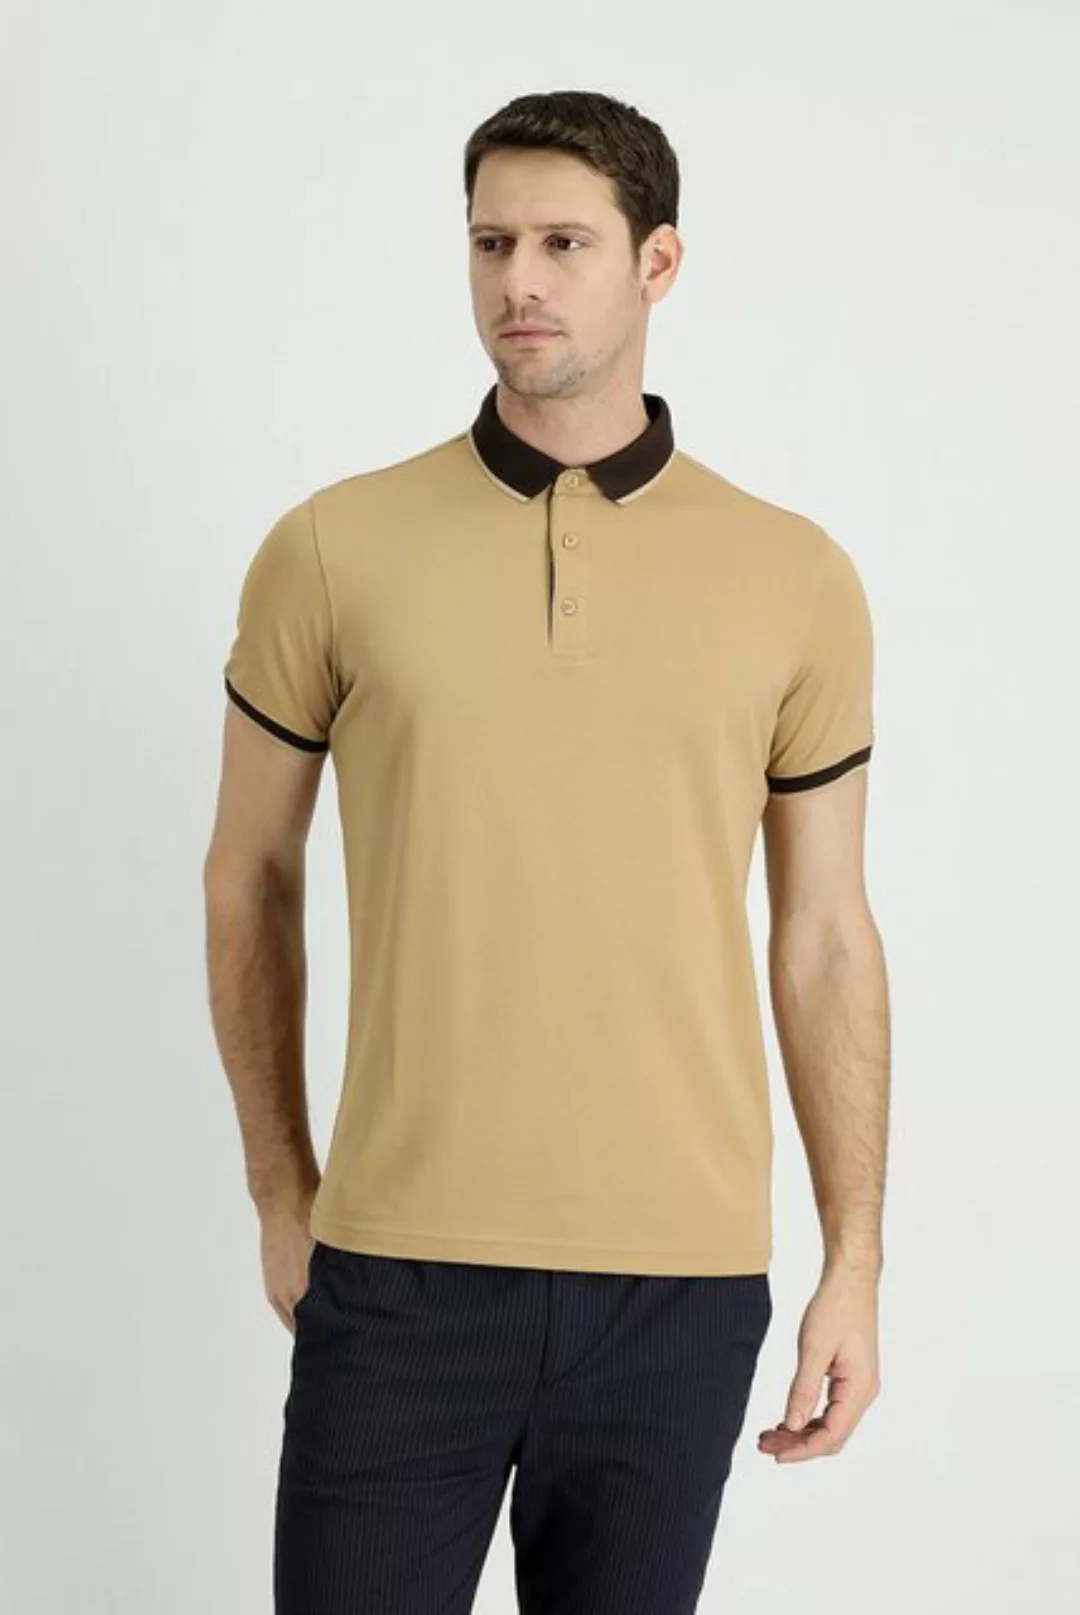 KIGILI Poloshirt KIGILI T-Shirt mit Polokragen, reguläre Passform, kurzärml günstig online kaufen